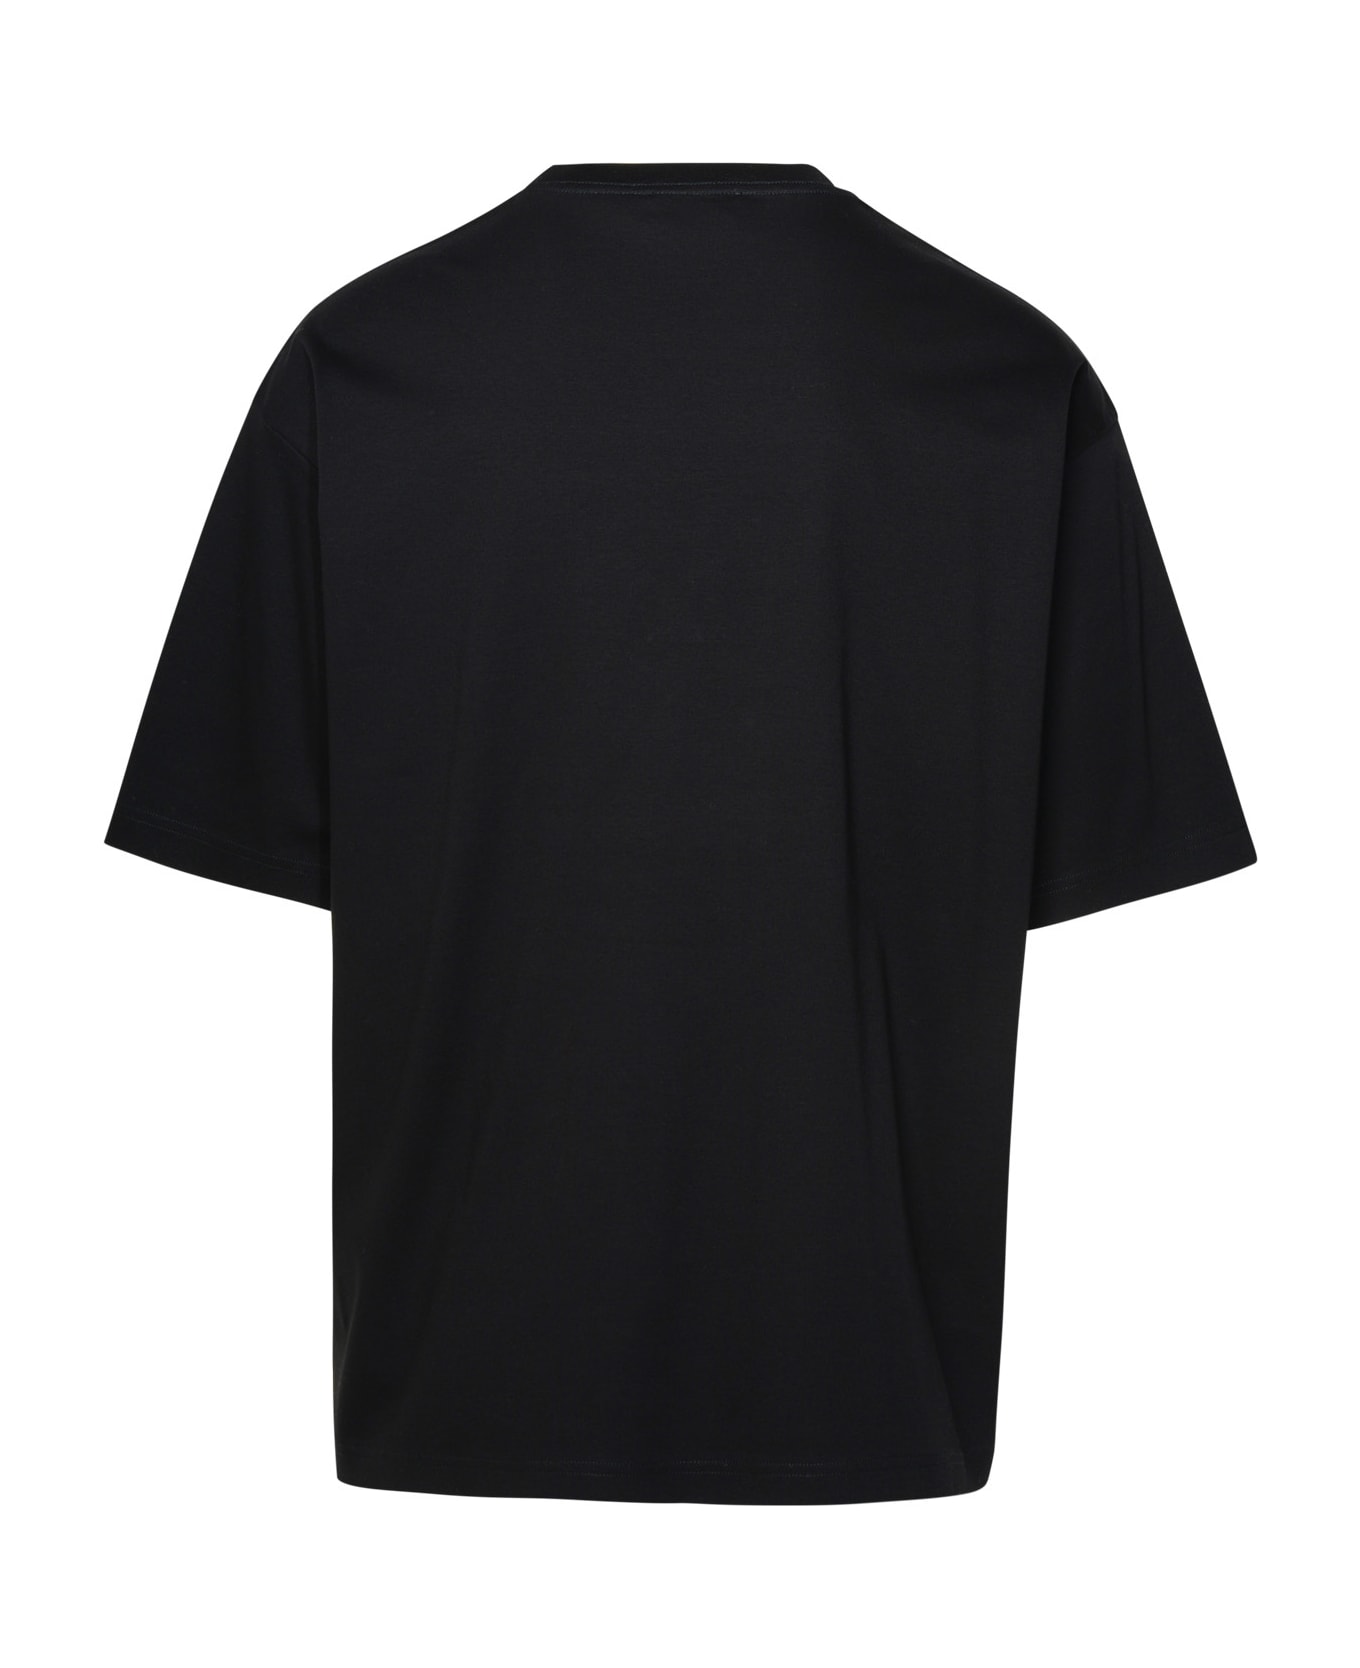 Lanvin Black Cotton T-shirt - Nero シャツ